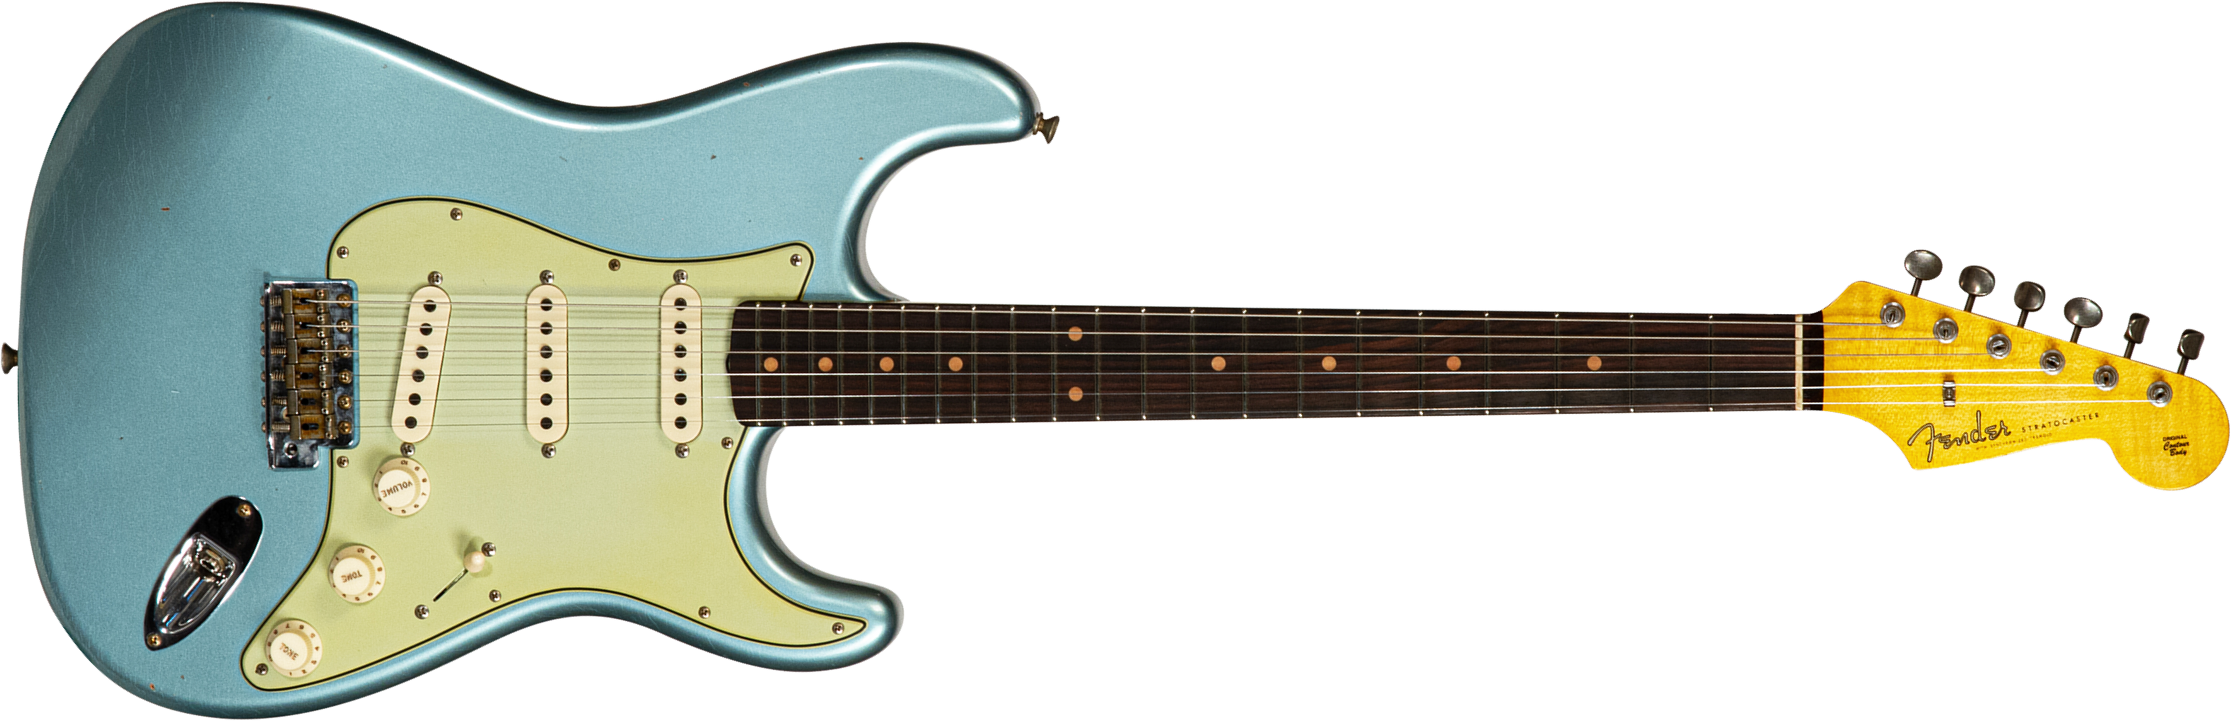 Fender Custom Shop Strat 1959 3s Trem Rw #cz566857 - Journeyman Relic Teal Green Metallic - Guitarra eléctrica con forma de str. - Main picture